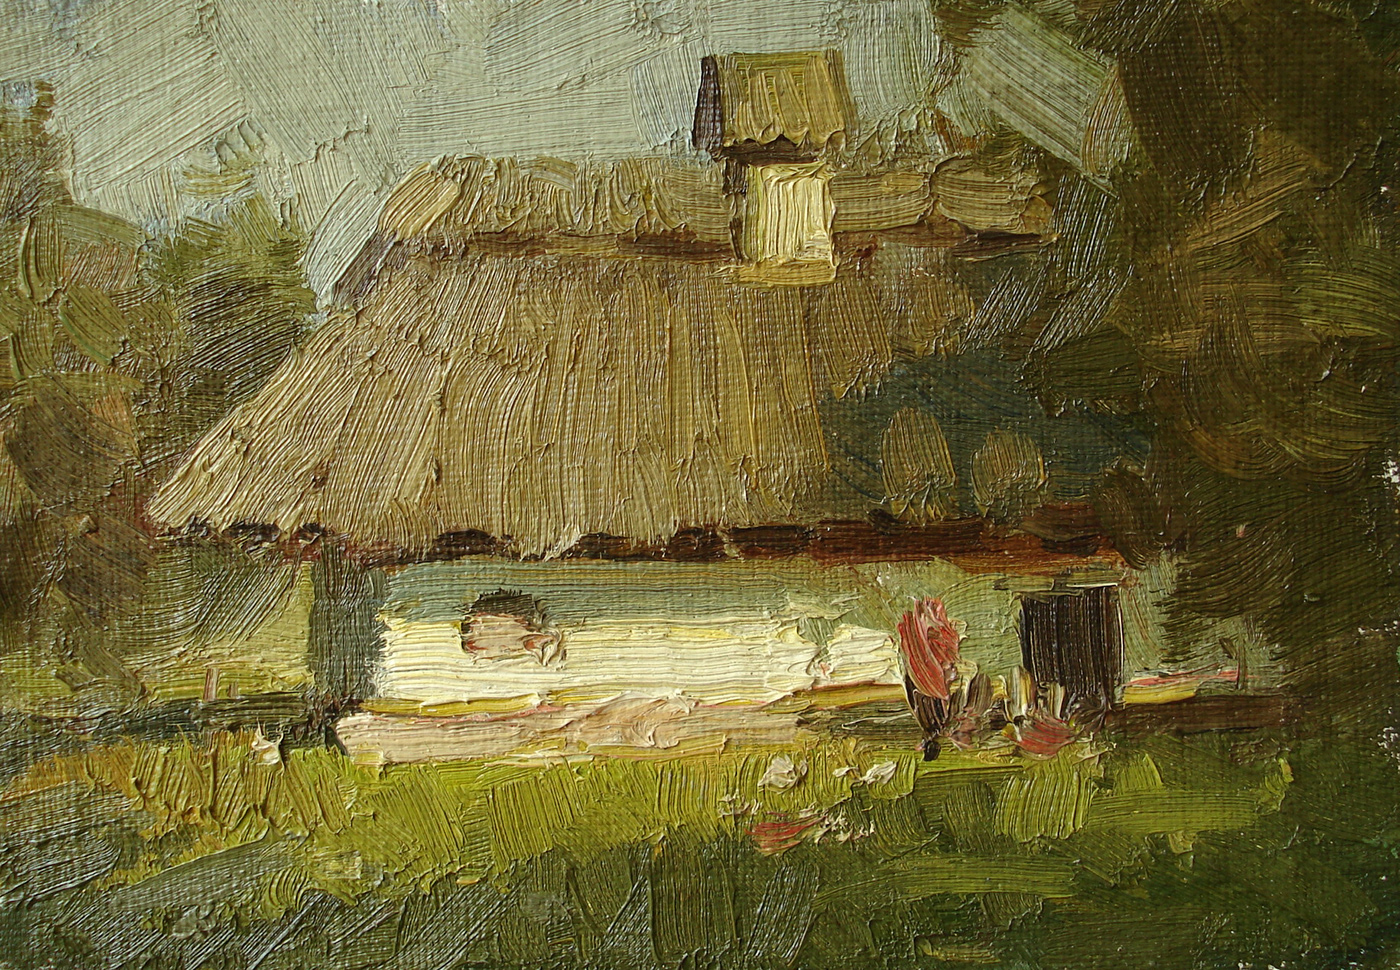 plein air Oil Painting oil on canvas ukraine traditional Ethnic village countryside hut pleinair